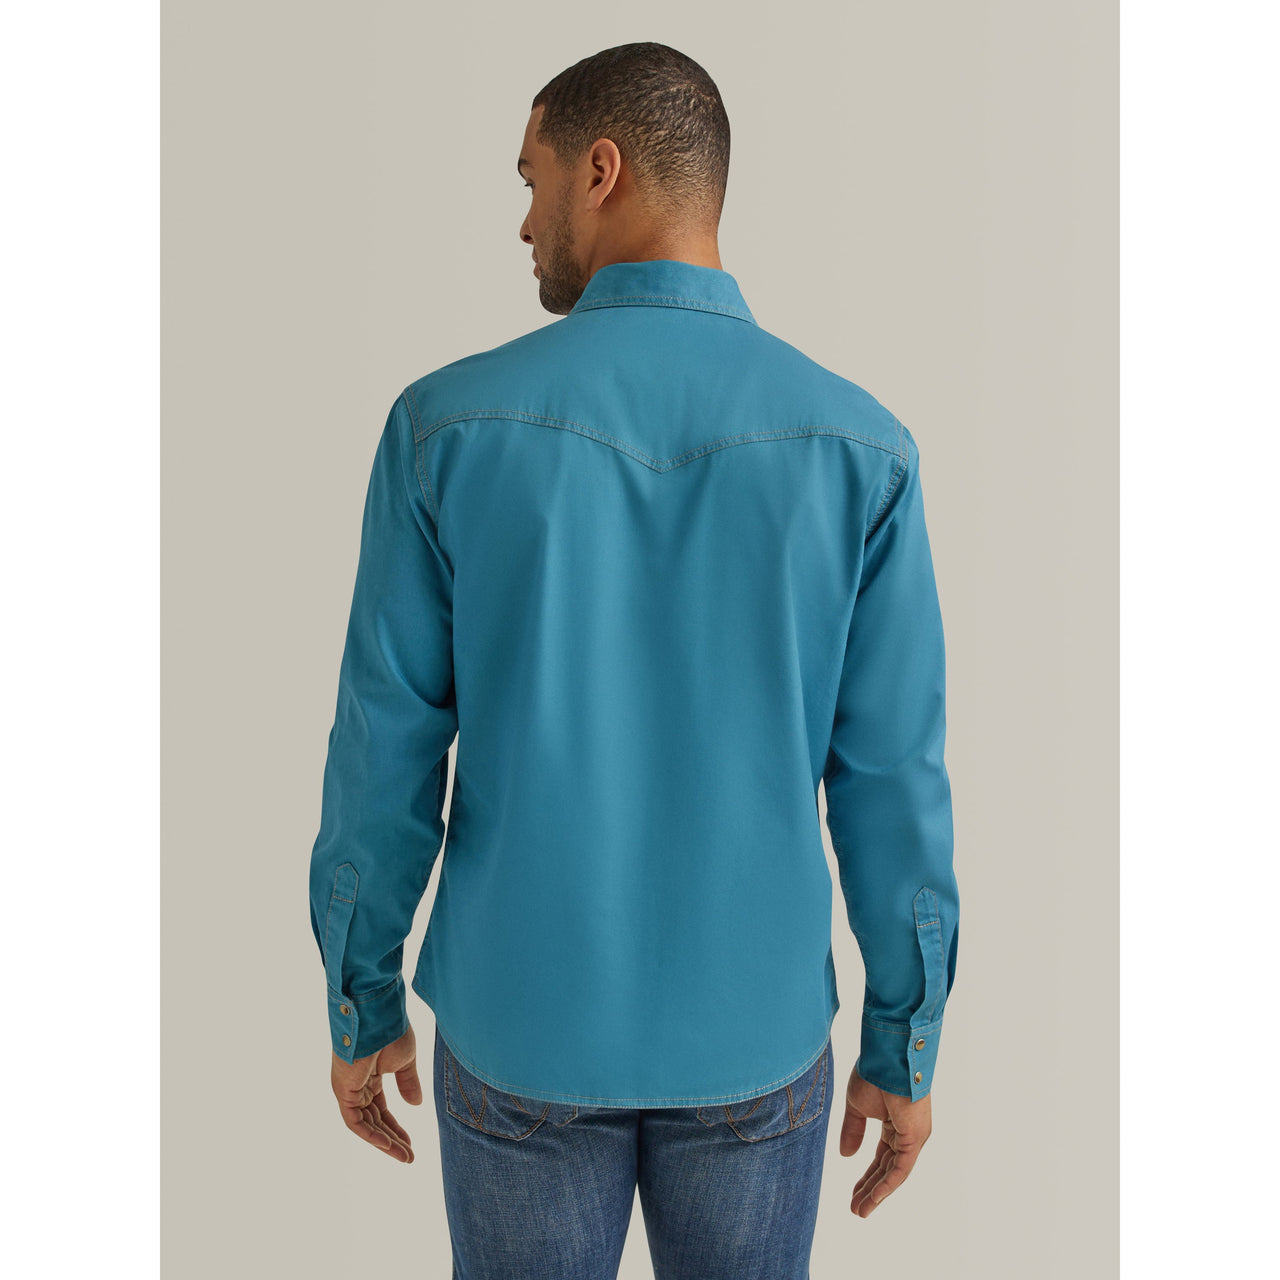 Wrangler Men's Retro Premium Long Sleeve Solid Snap Shirt - Teal